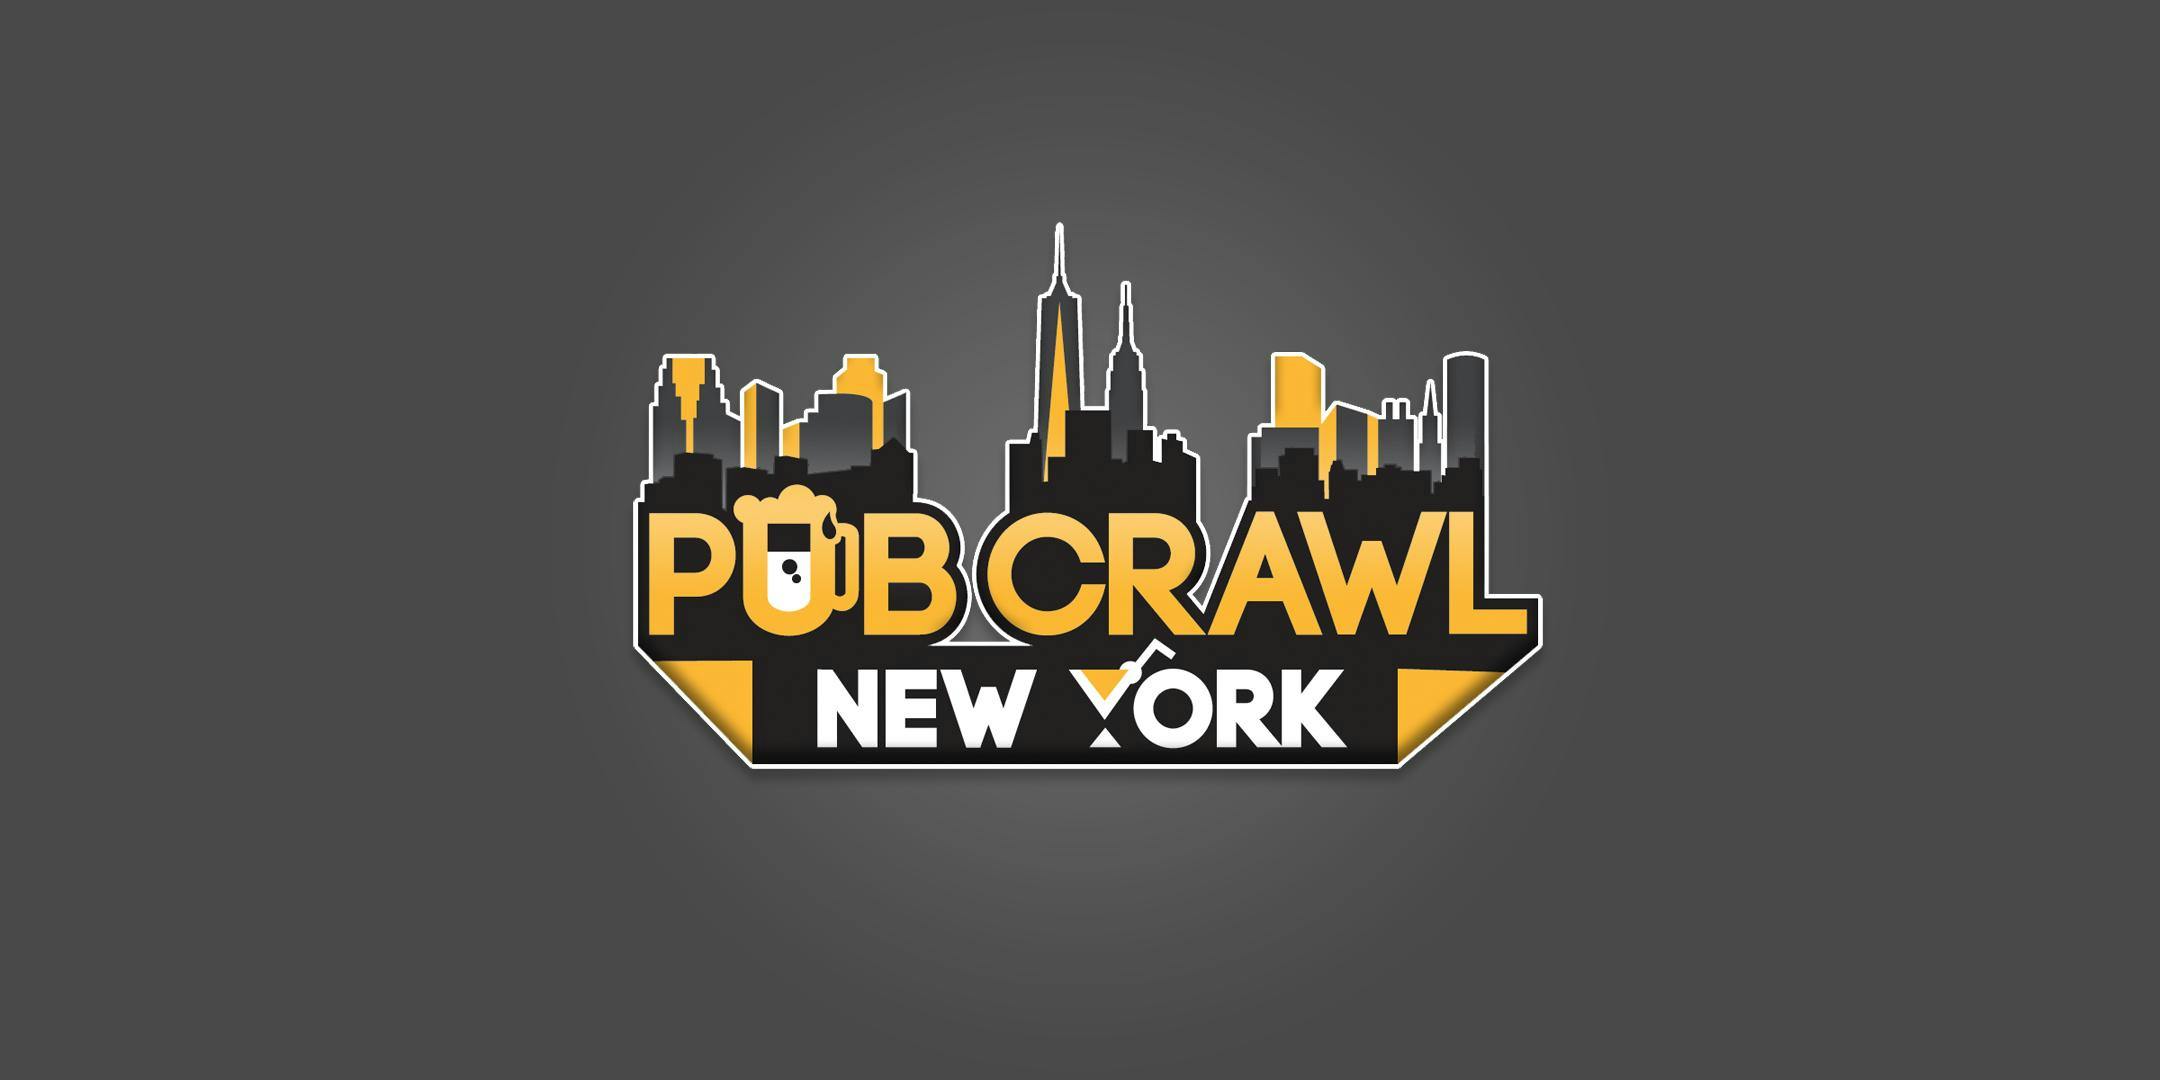 NYC CRAFT BEER & COCKTAIL CRAWL